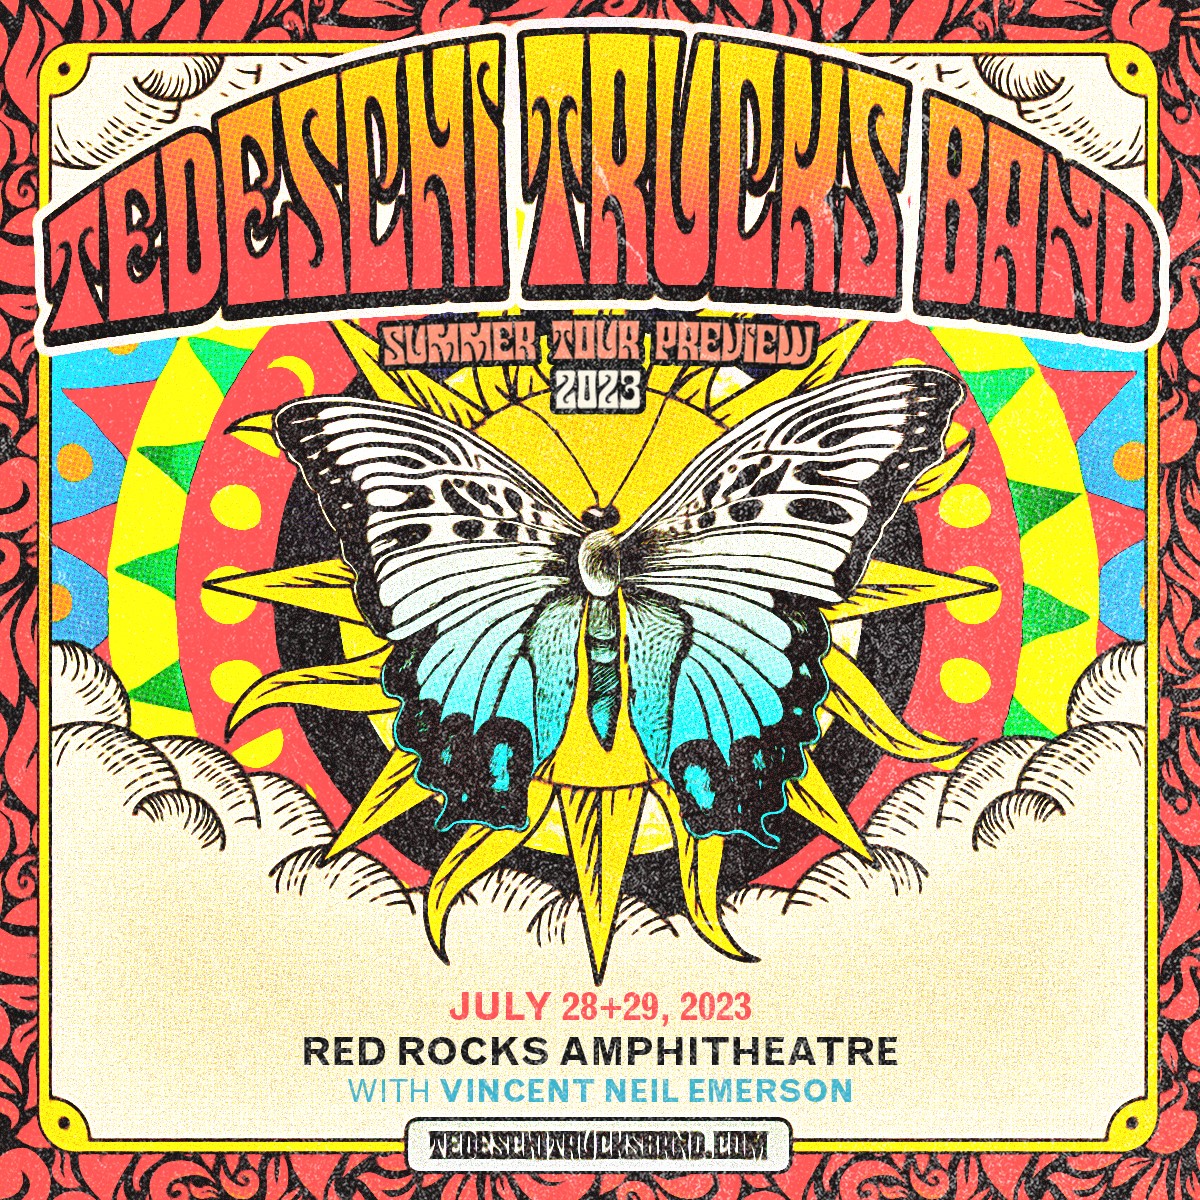 Tedeschi Trucks Band Shuttle To Red Rocks July 28, 2023 CID Colorado